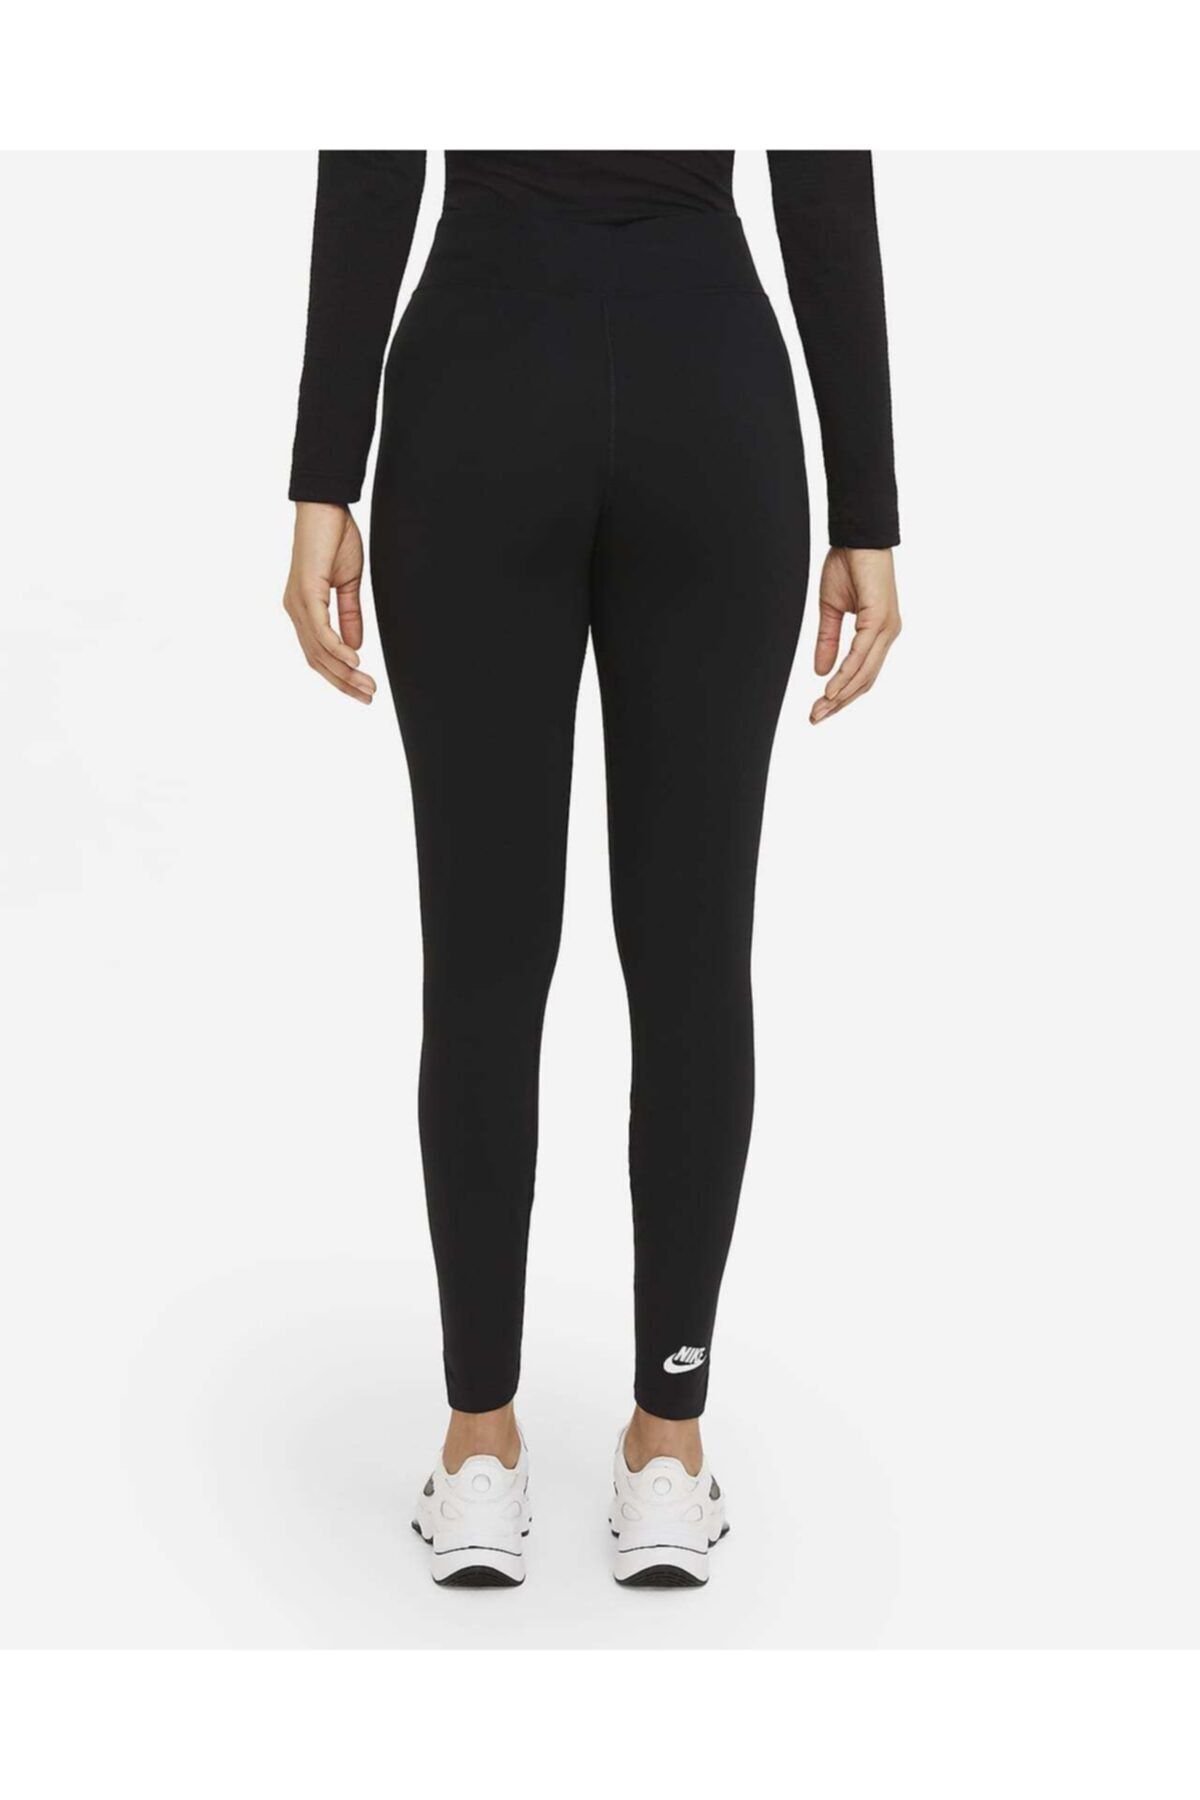 Nike Sportswear Leg-a-see Leggings Kadın Tayt - Siyah Dd3612-010 Fiyatı,  Yorumları - Trendyol